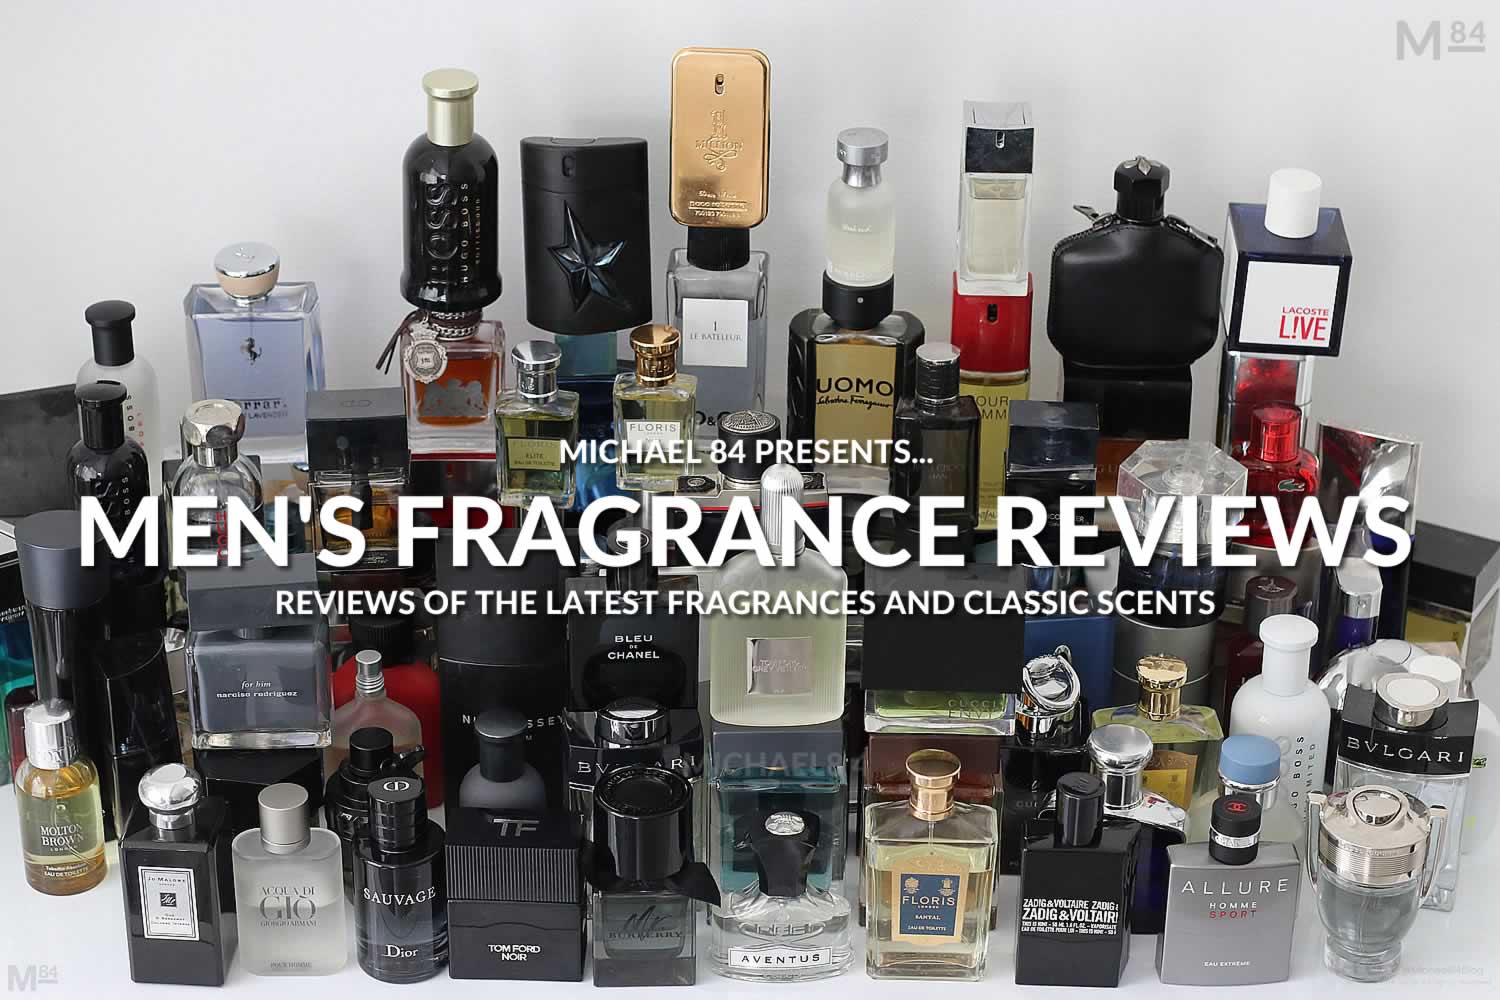 ALLURE HOMME Fragrance Collection - Fragrance